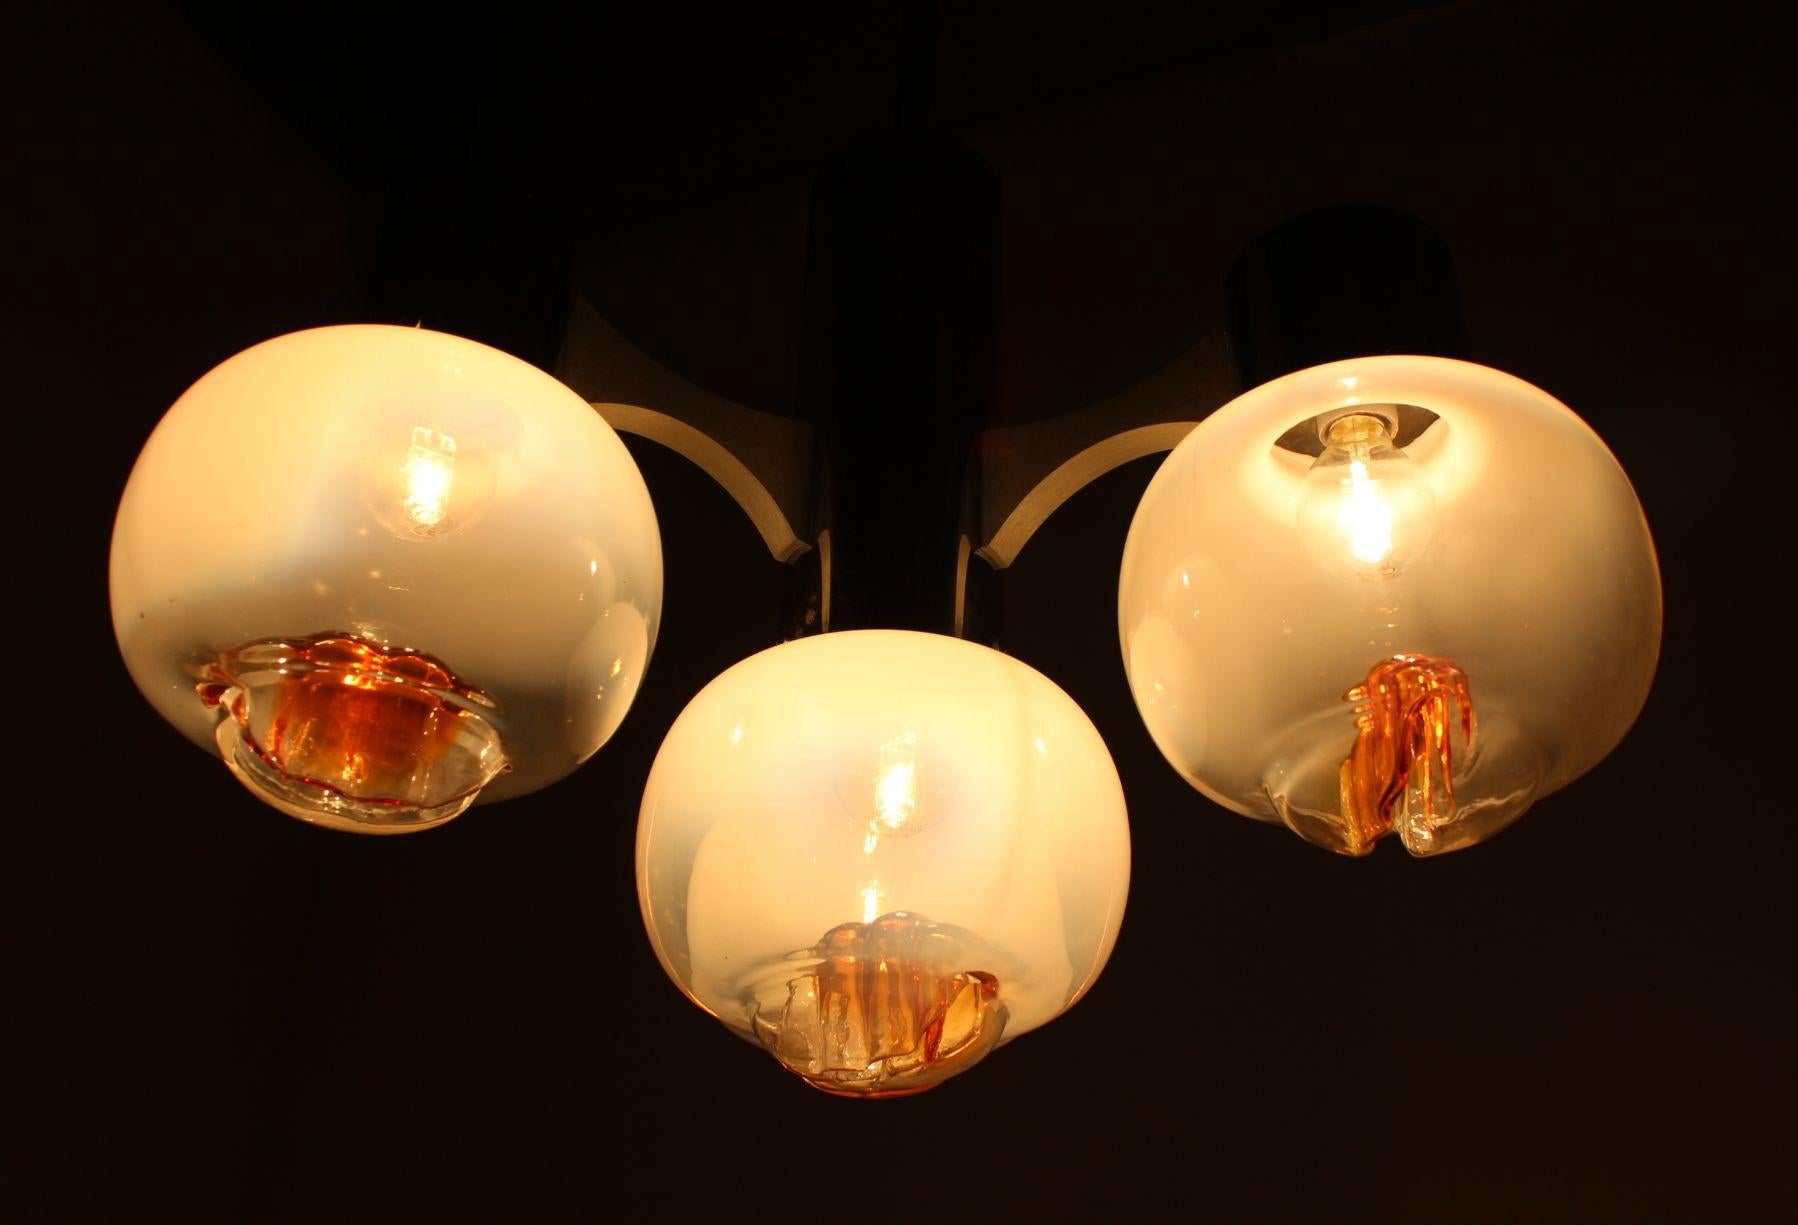 Chandelier, pendant light very nice style of lighting. Four Murano glass balls.